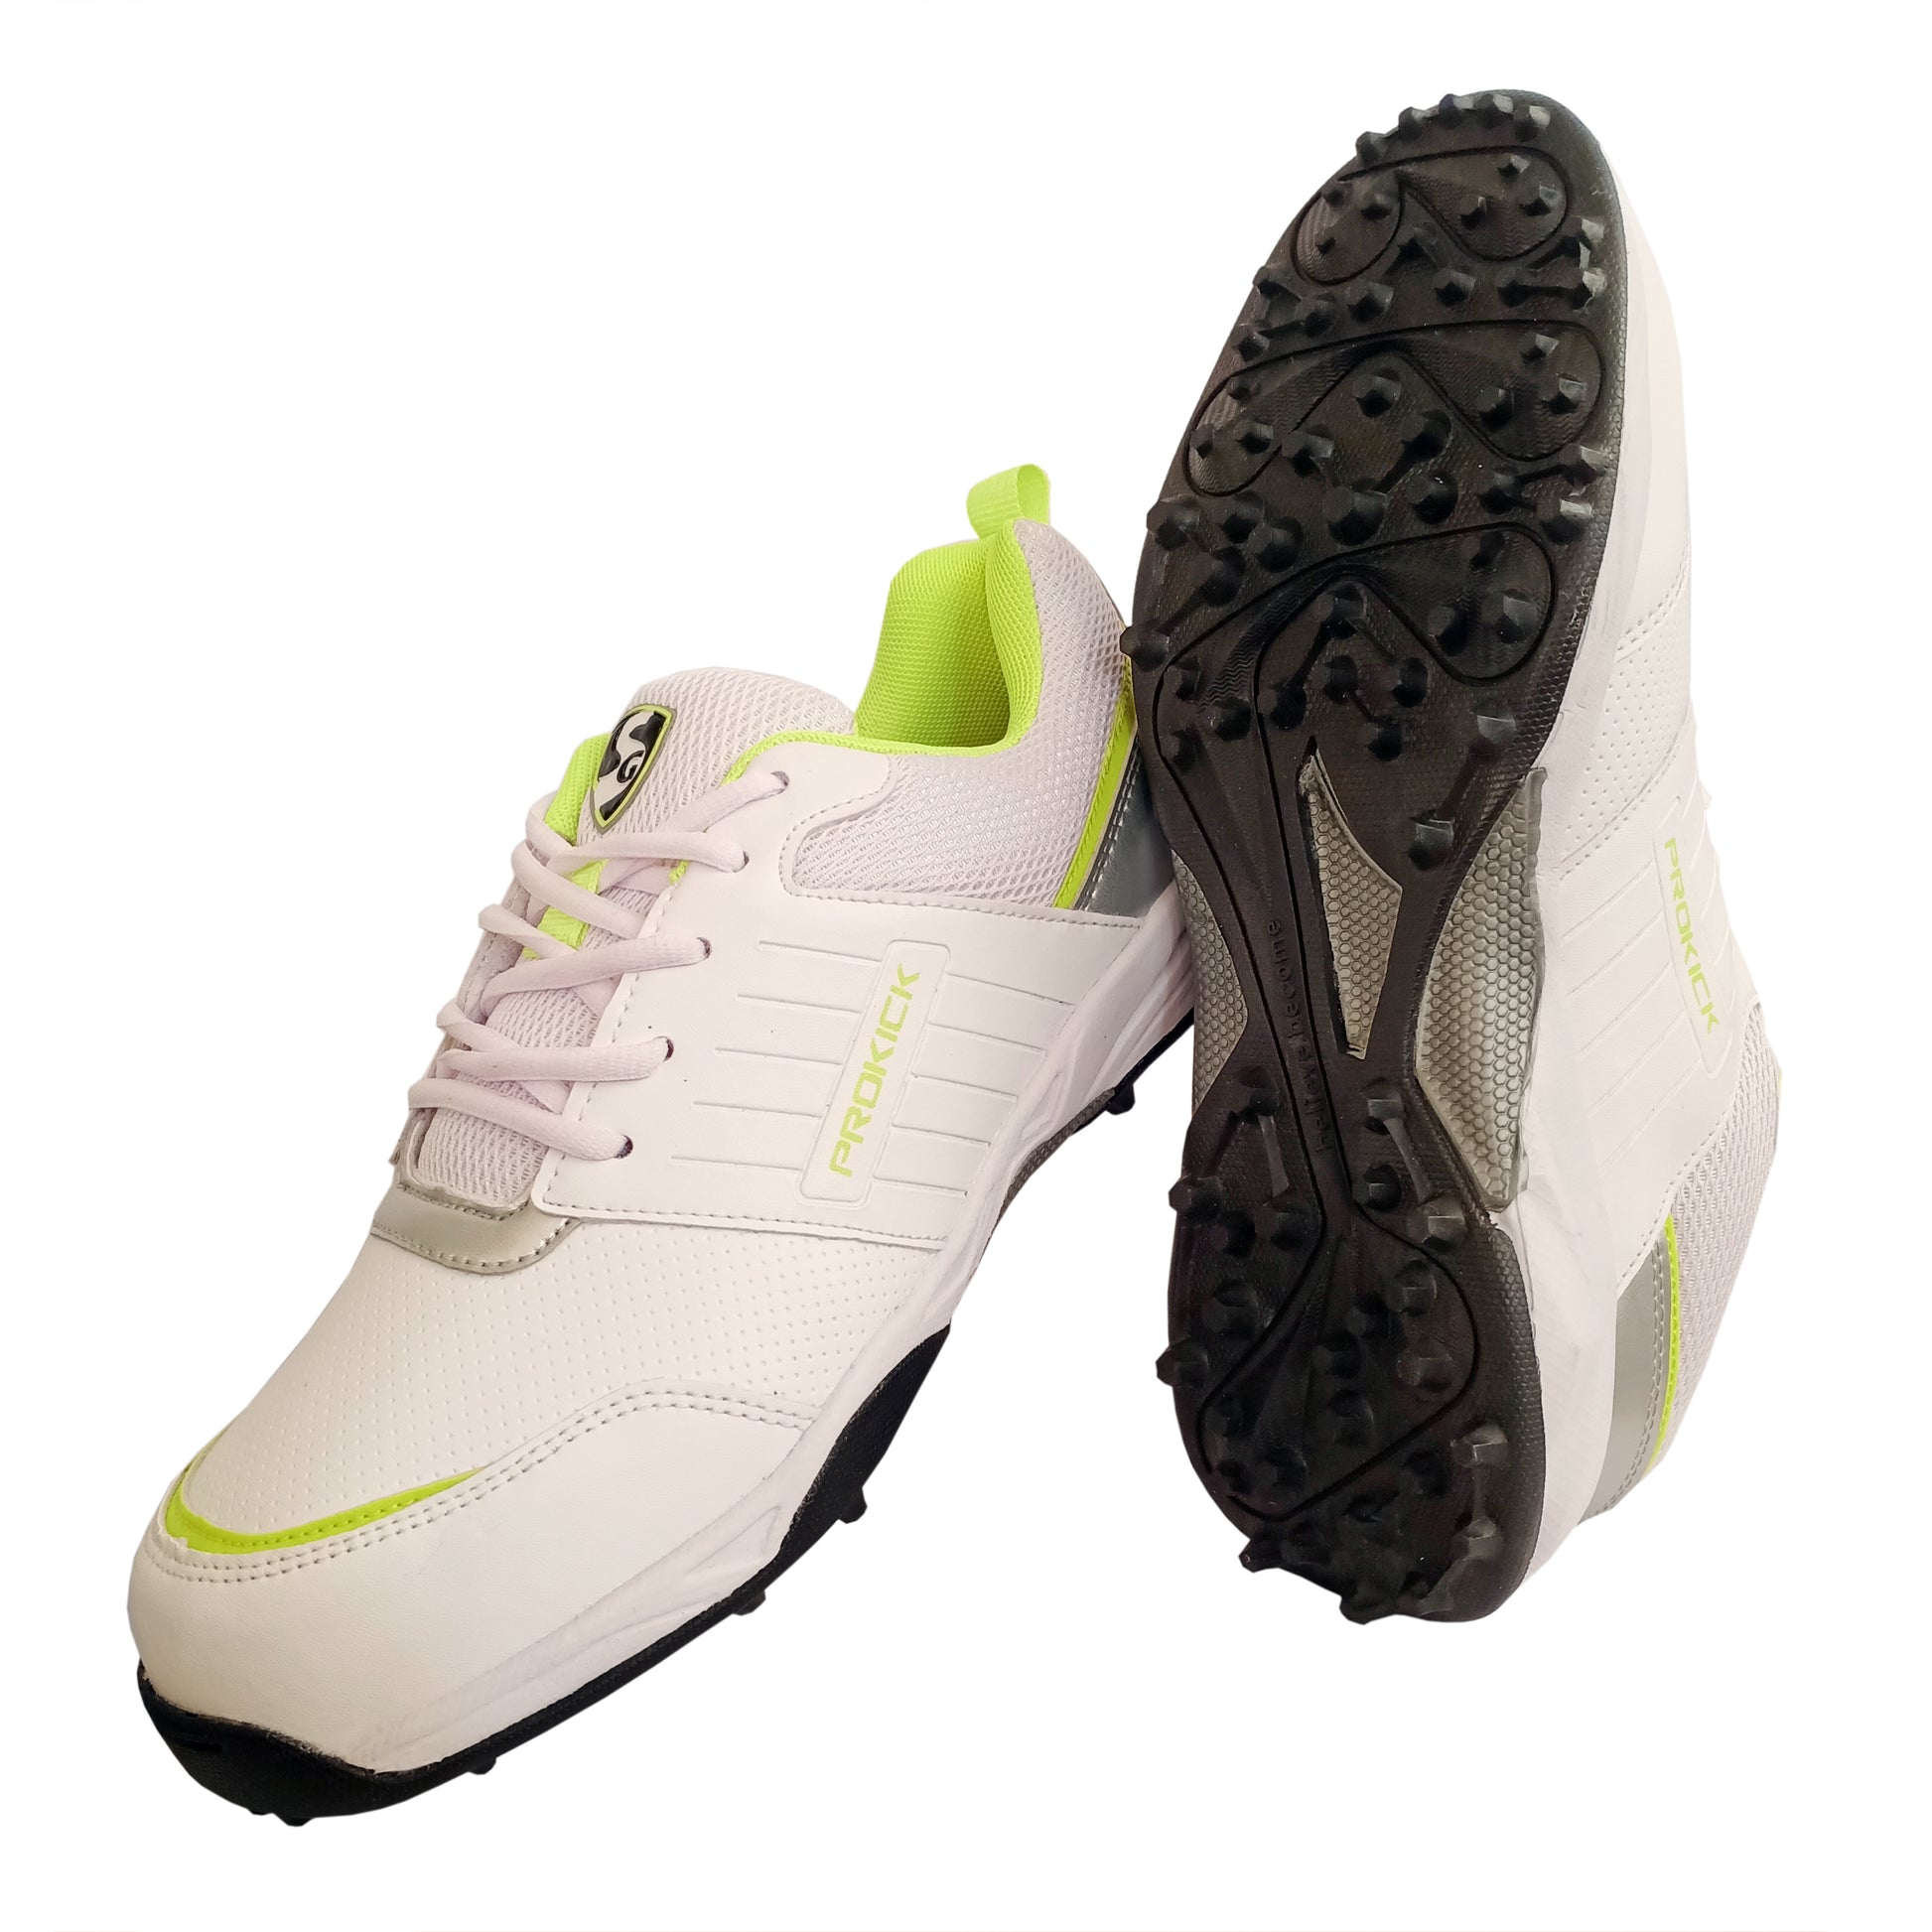 SG Prokick Spinner Cricket Shoe - Best Price online Prokicksports.com